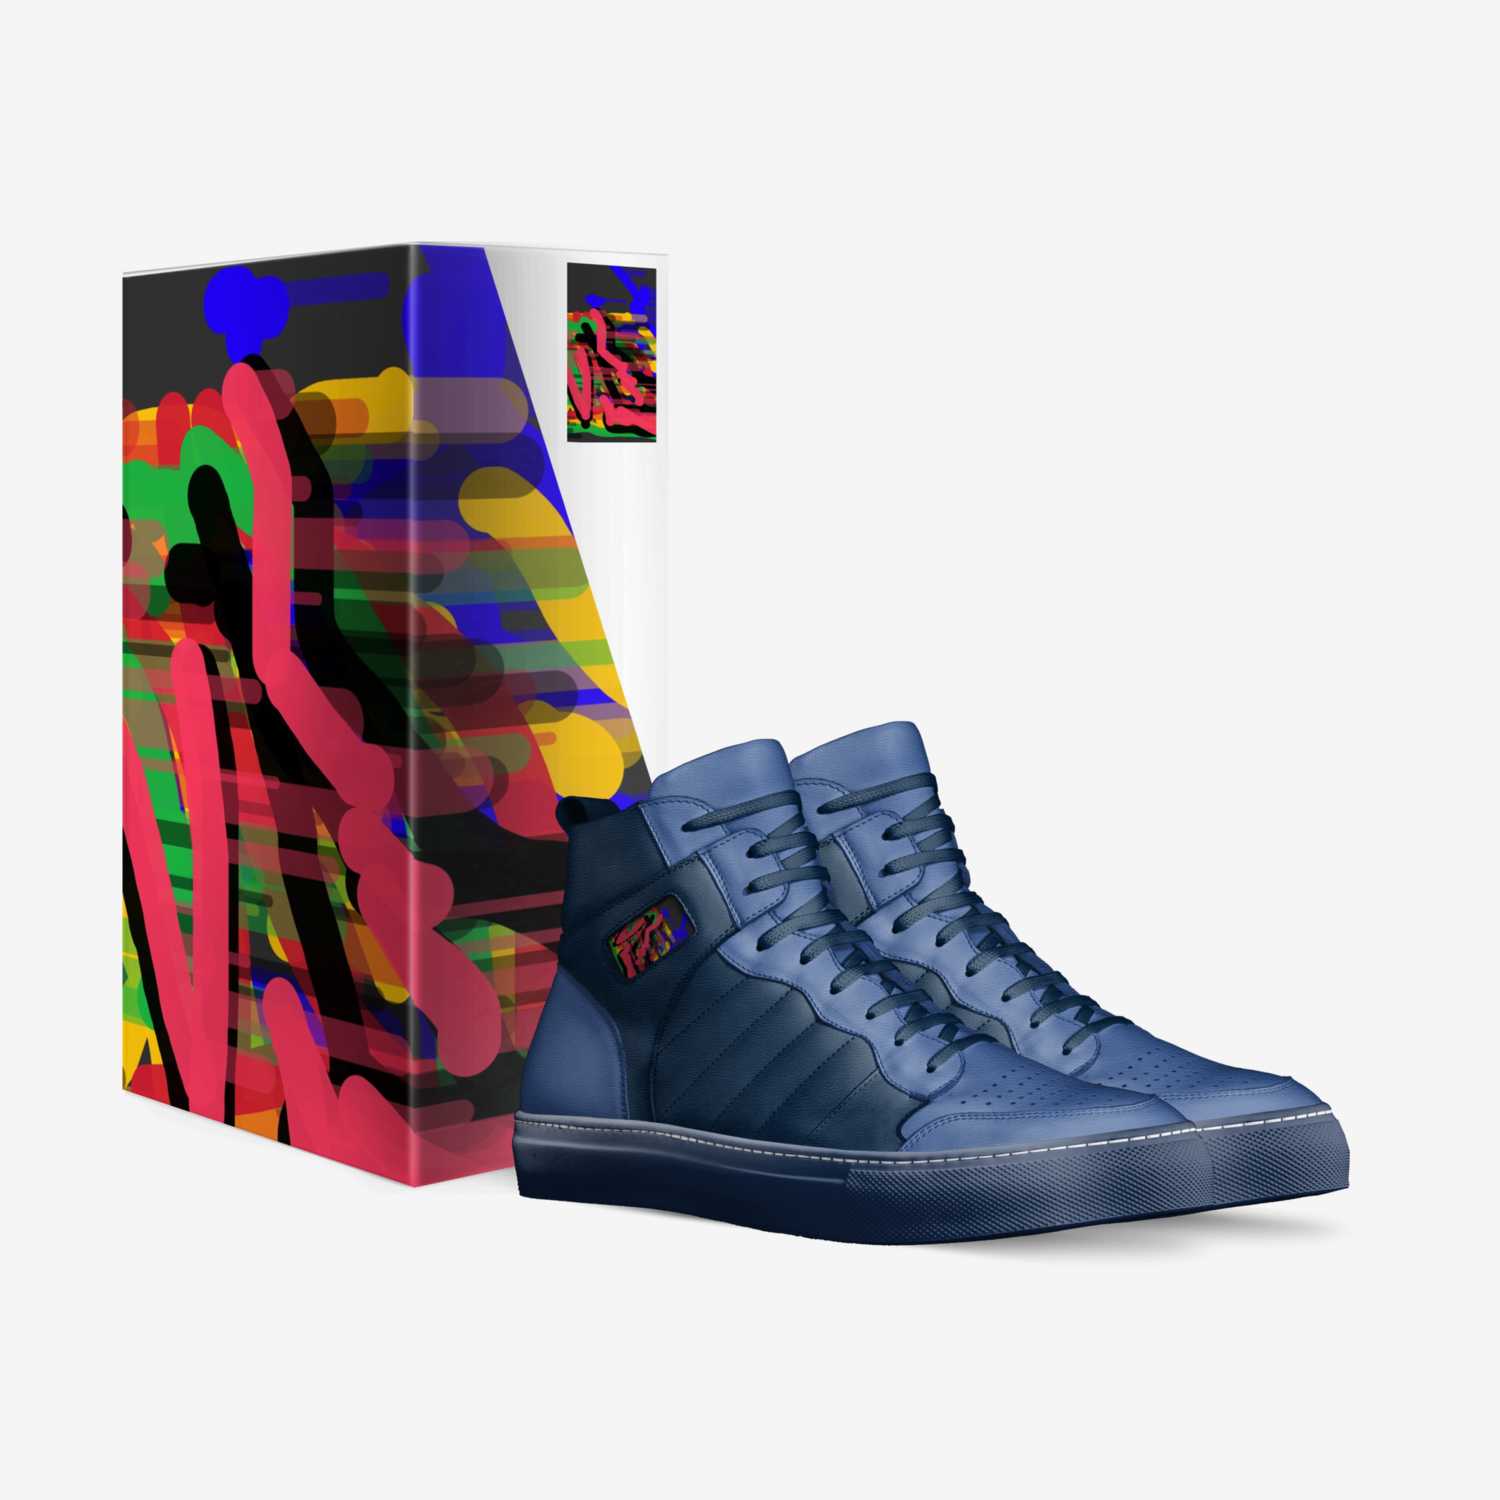 Atrbycav custom made in Italy shoes by Caviar Dreams | Box view